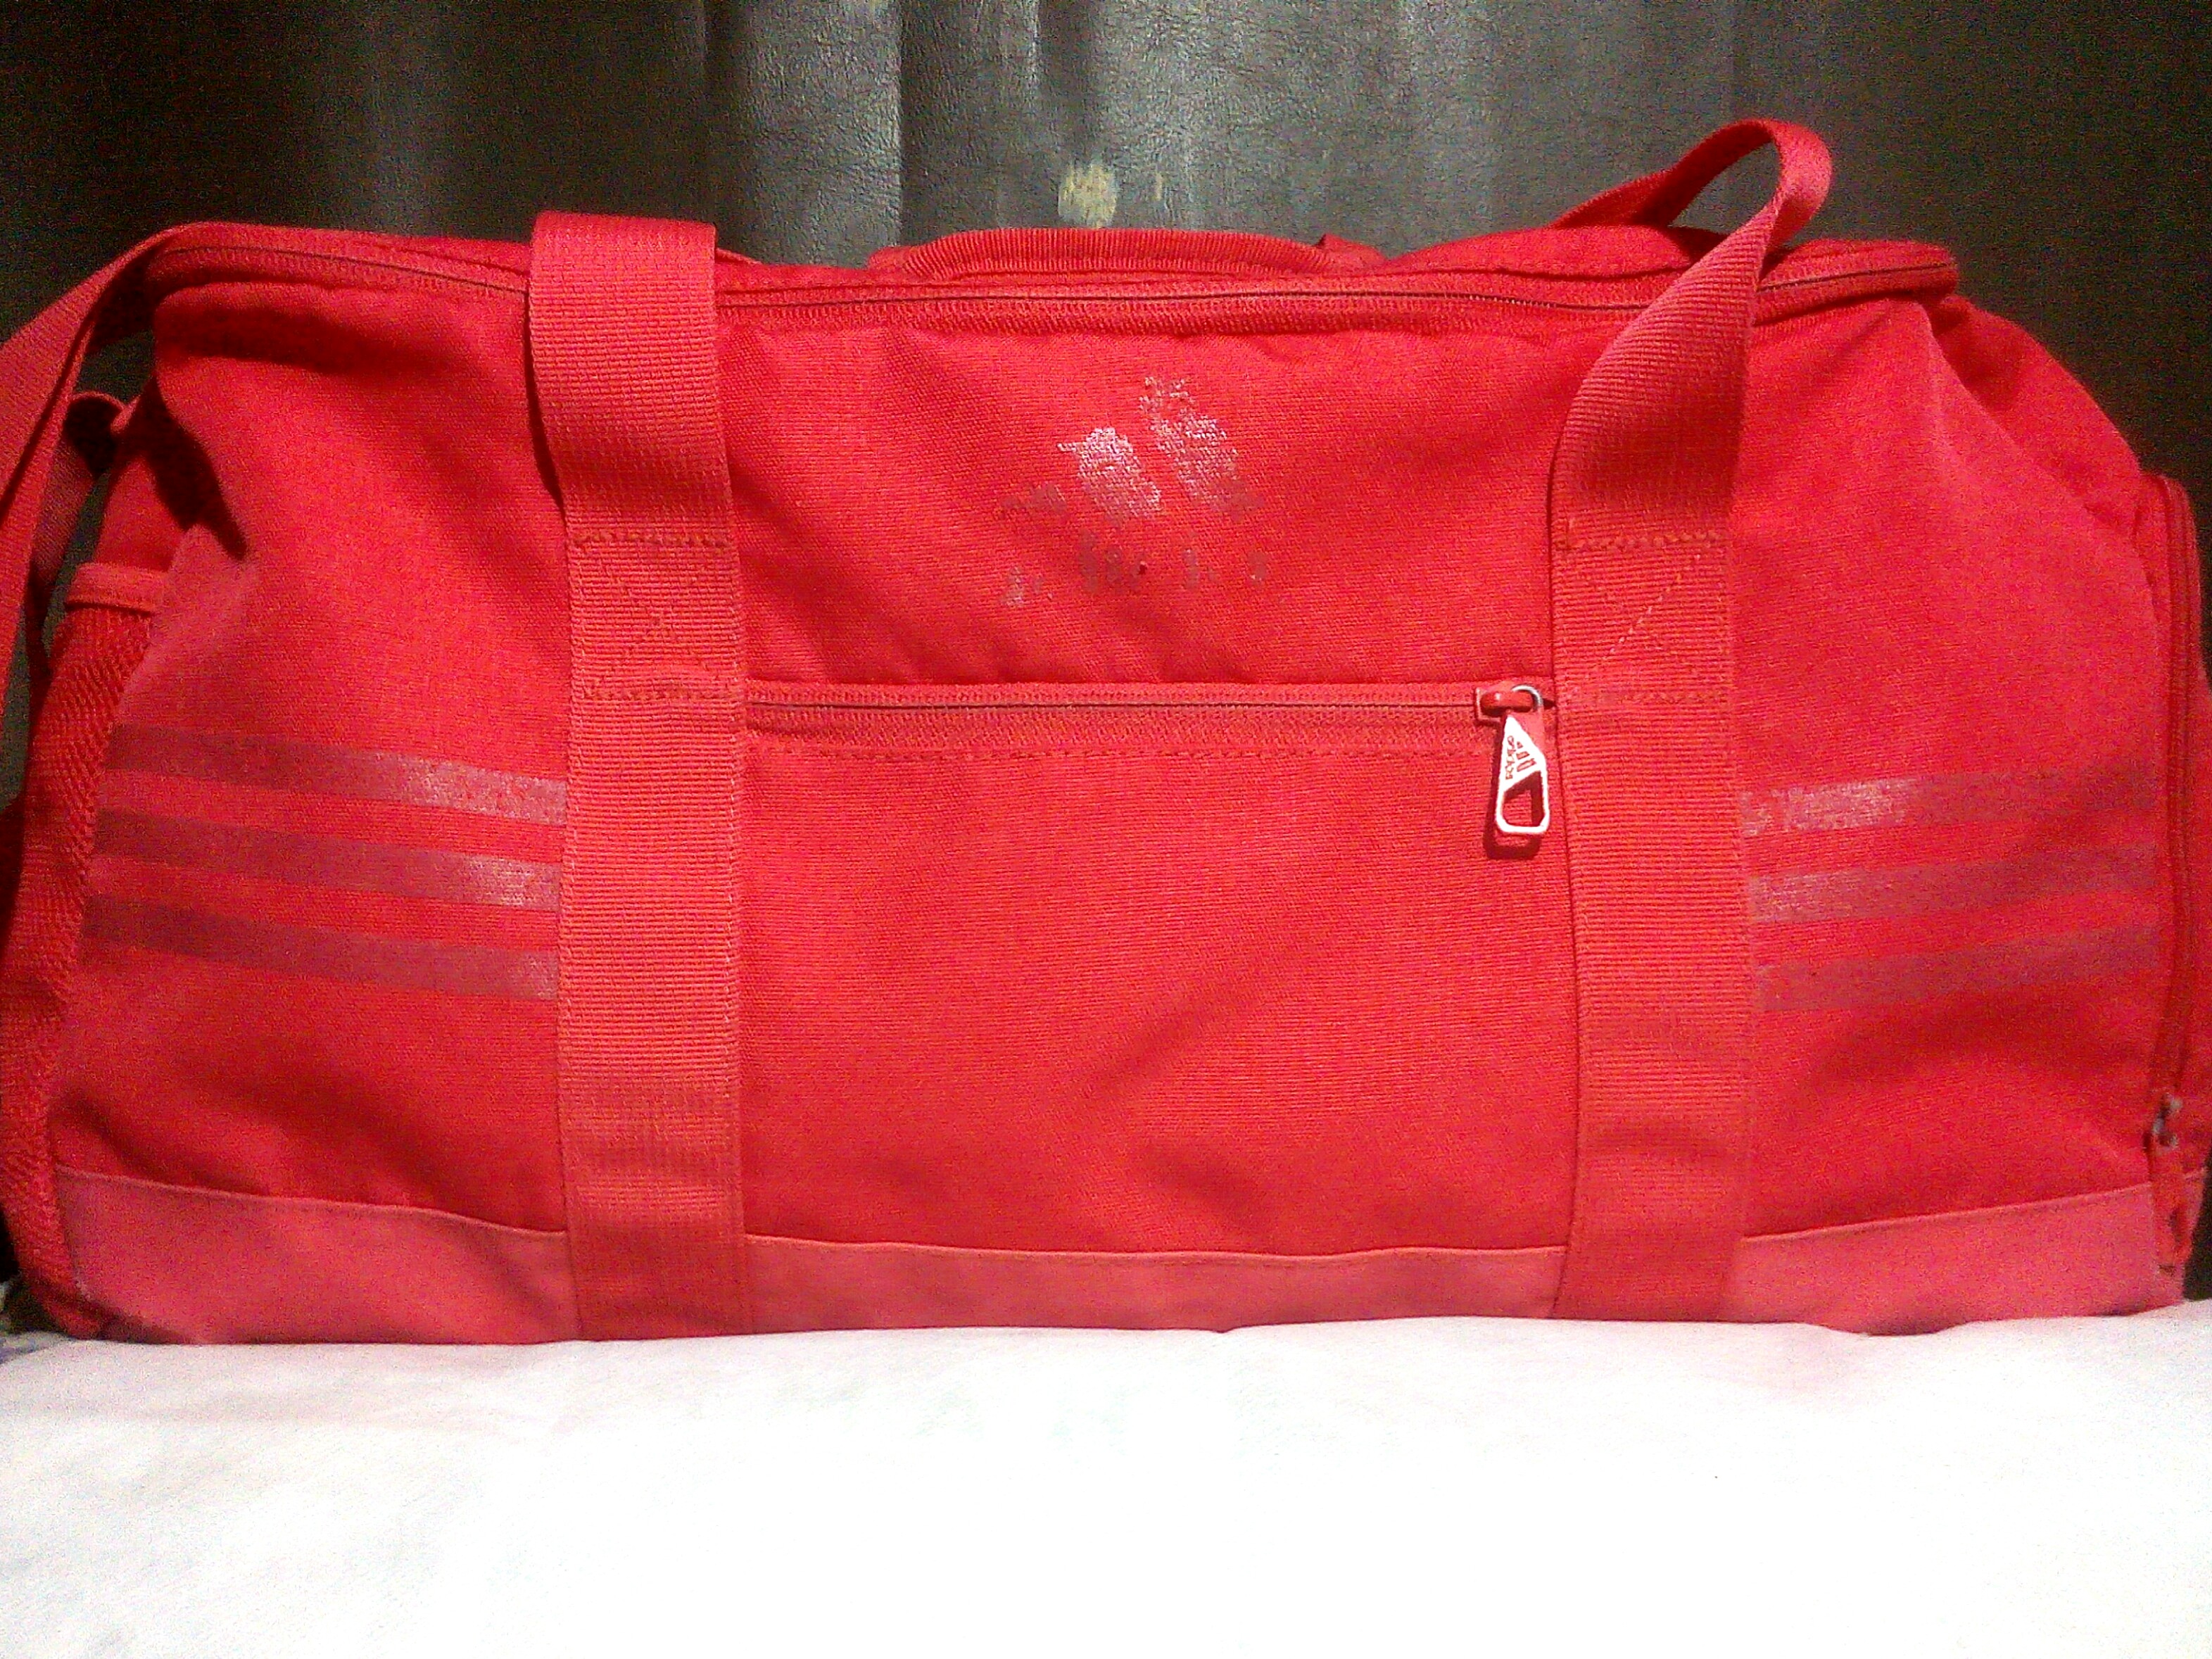 Adidas By Stella Mccartney Travel & Duffel Bag In Pastel Pink | ModeSens